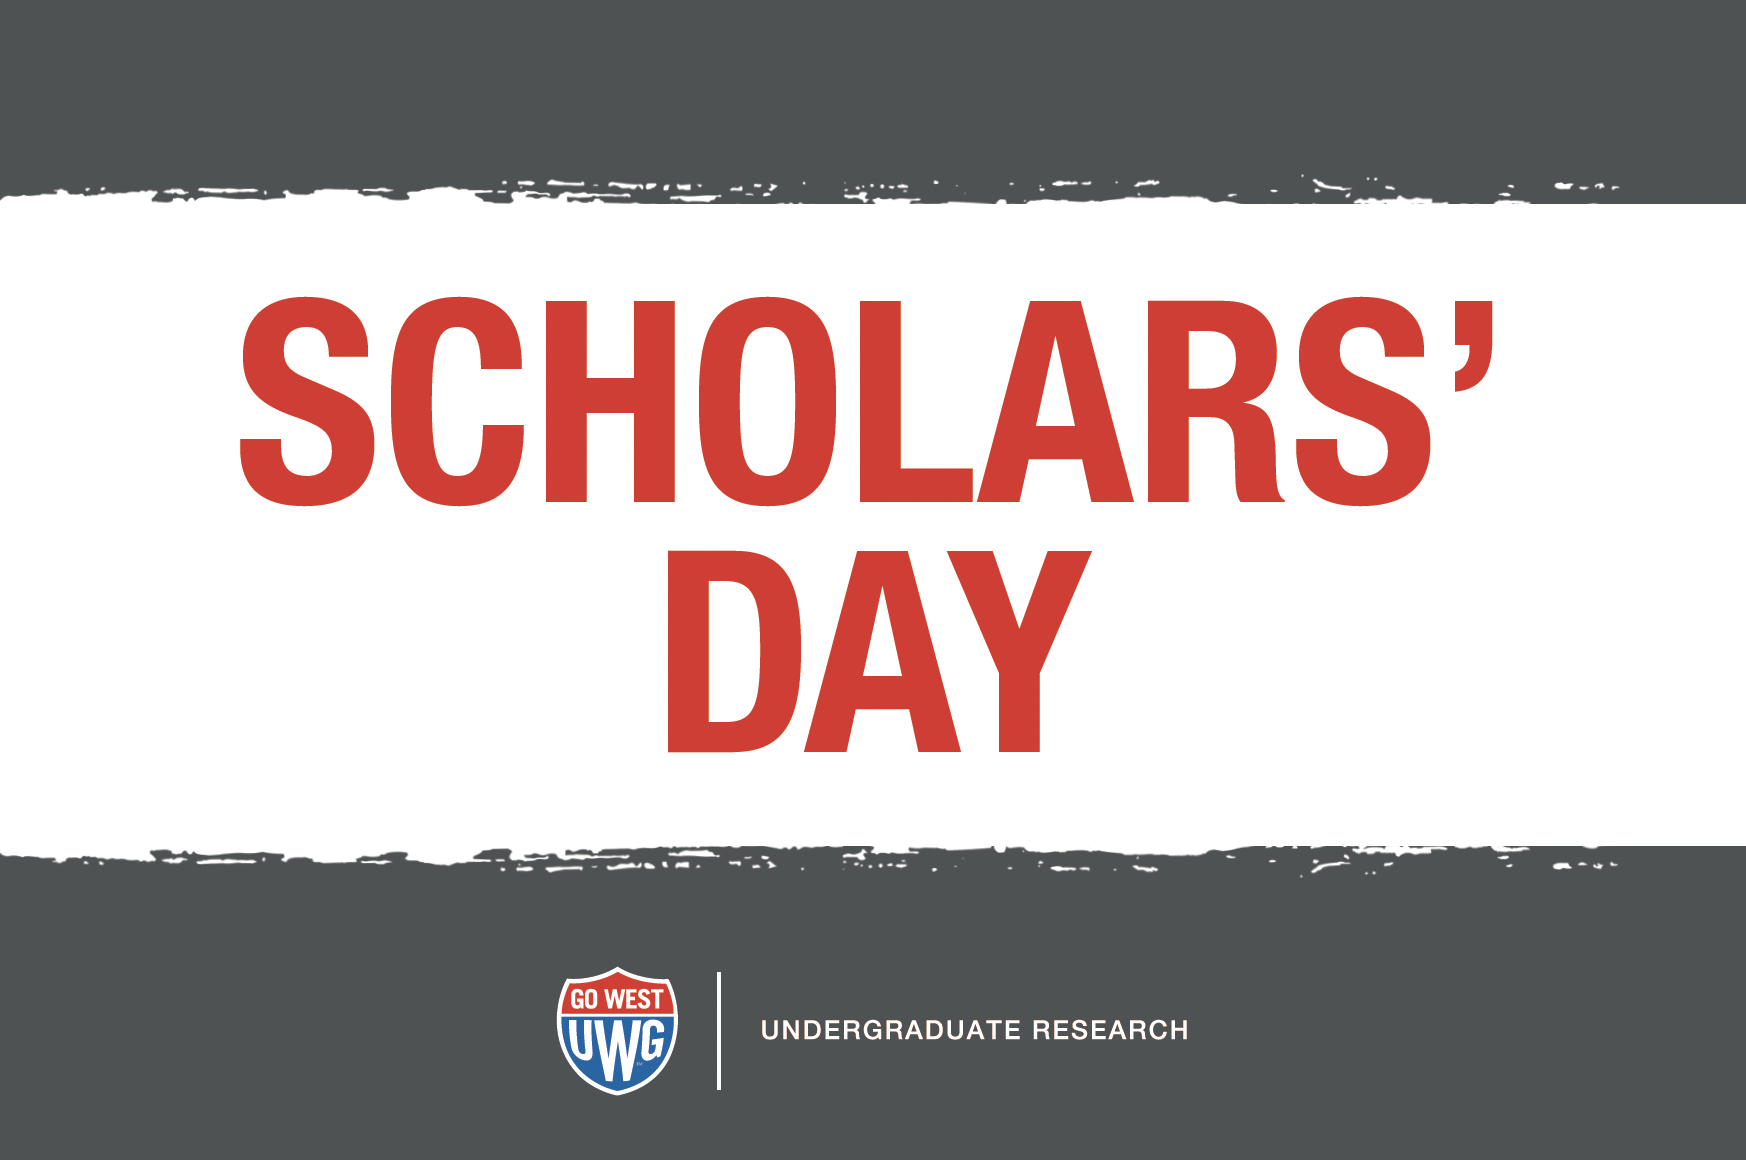 Scholars Day